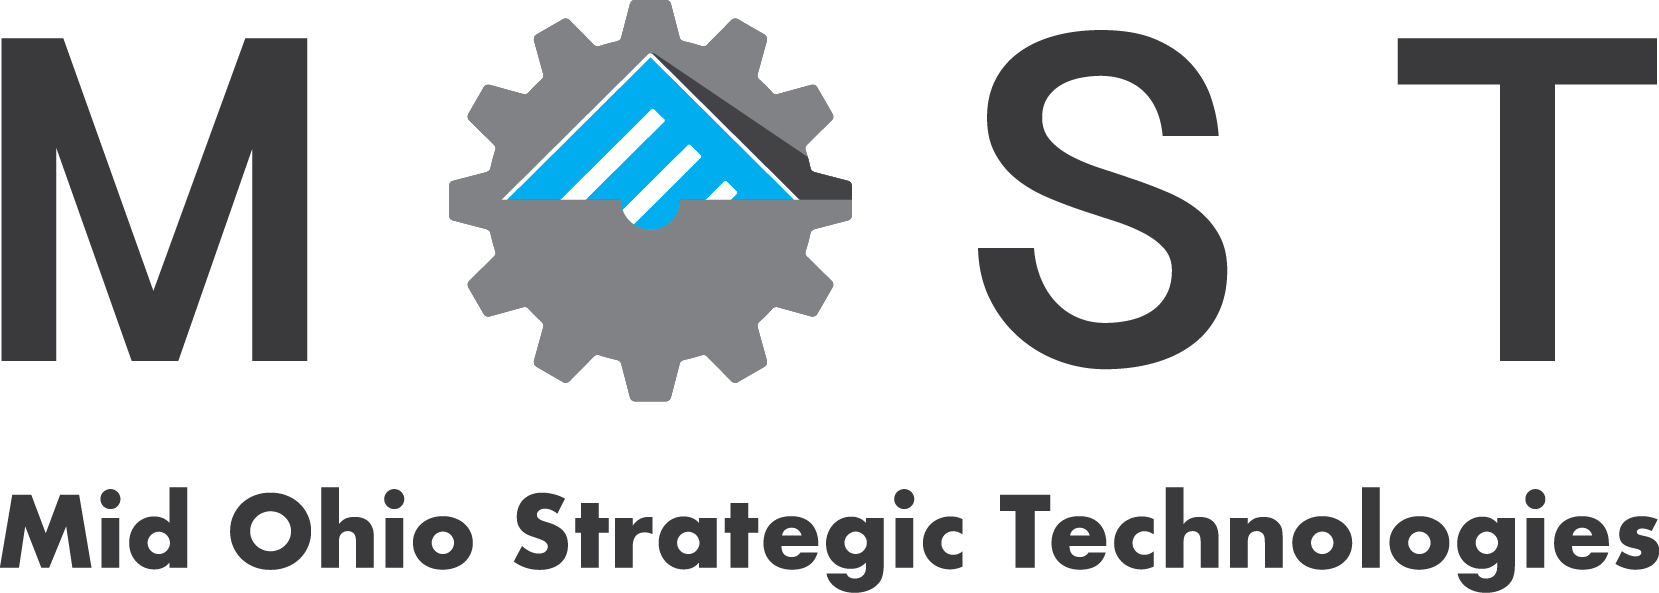 Columbus Logo - Mid Ohio Strategic Technologies